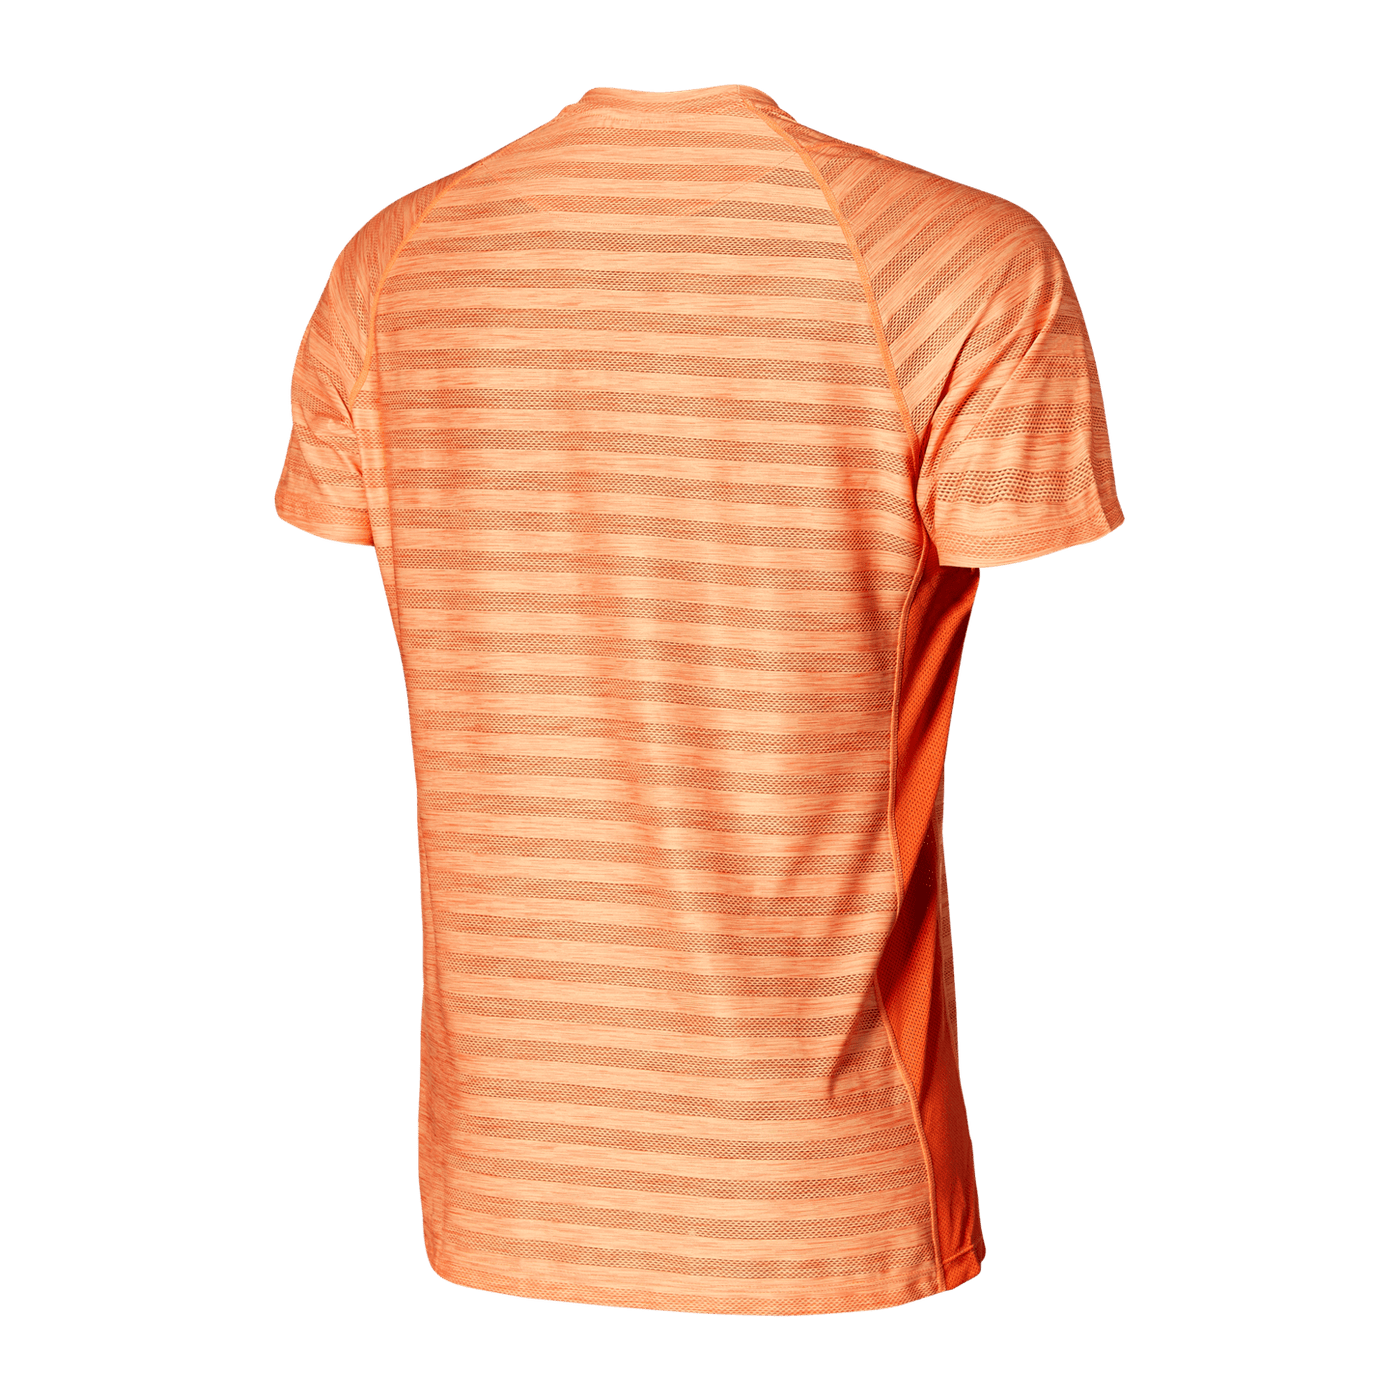 Hot Shot Short Sleeve Crew - Blaze Orange - Blue Sky Clothing & Lingerie